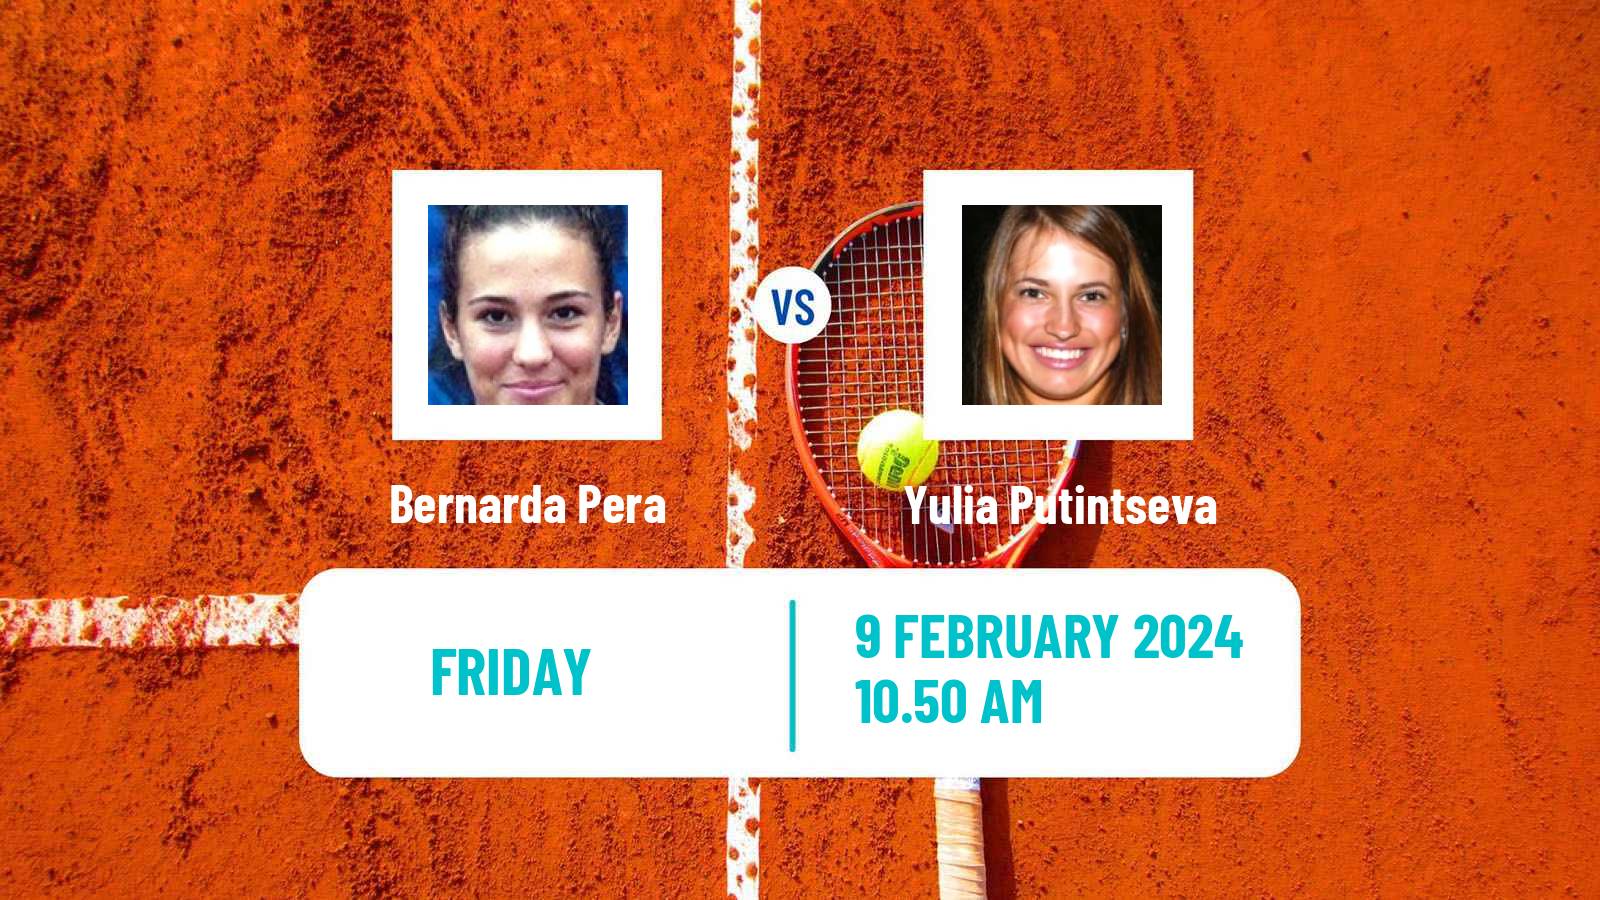 Tennis WTA Doha Bernarda Pera - Yulia Putintseva